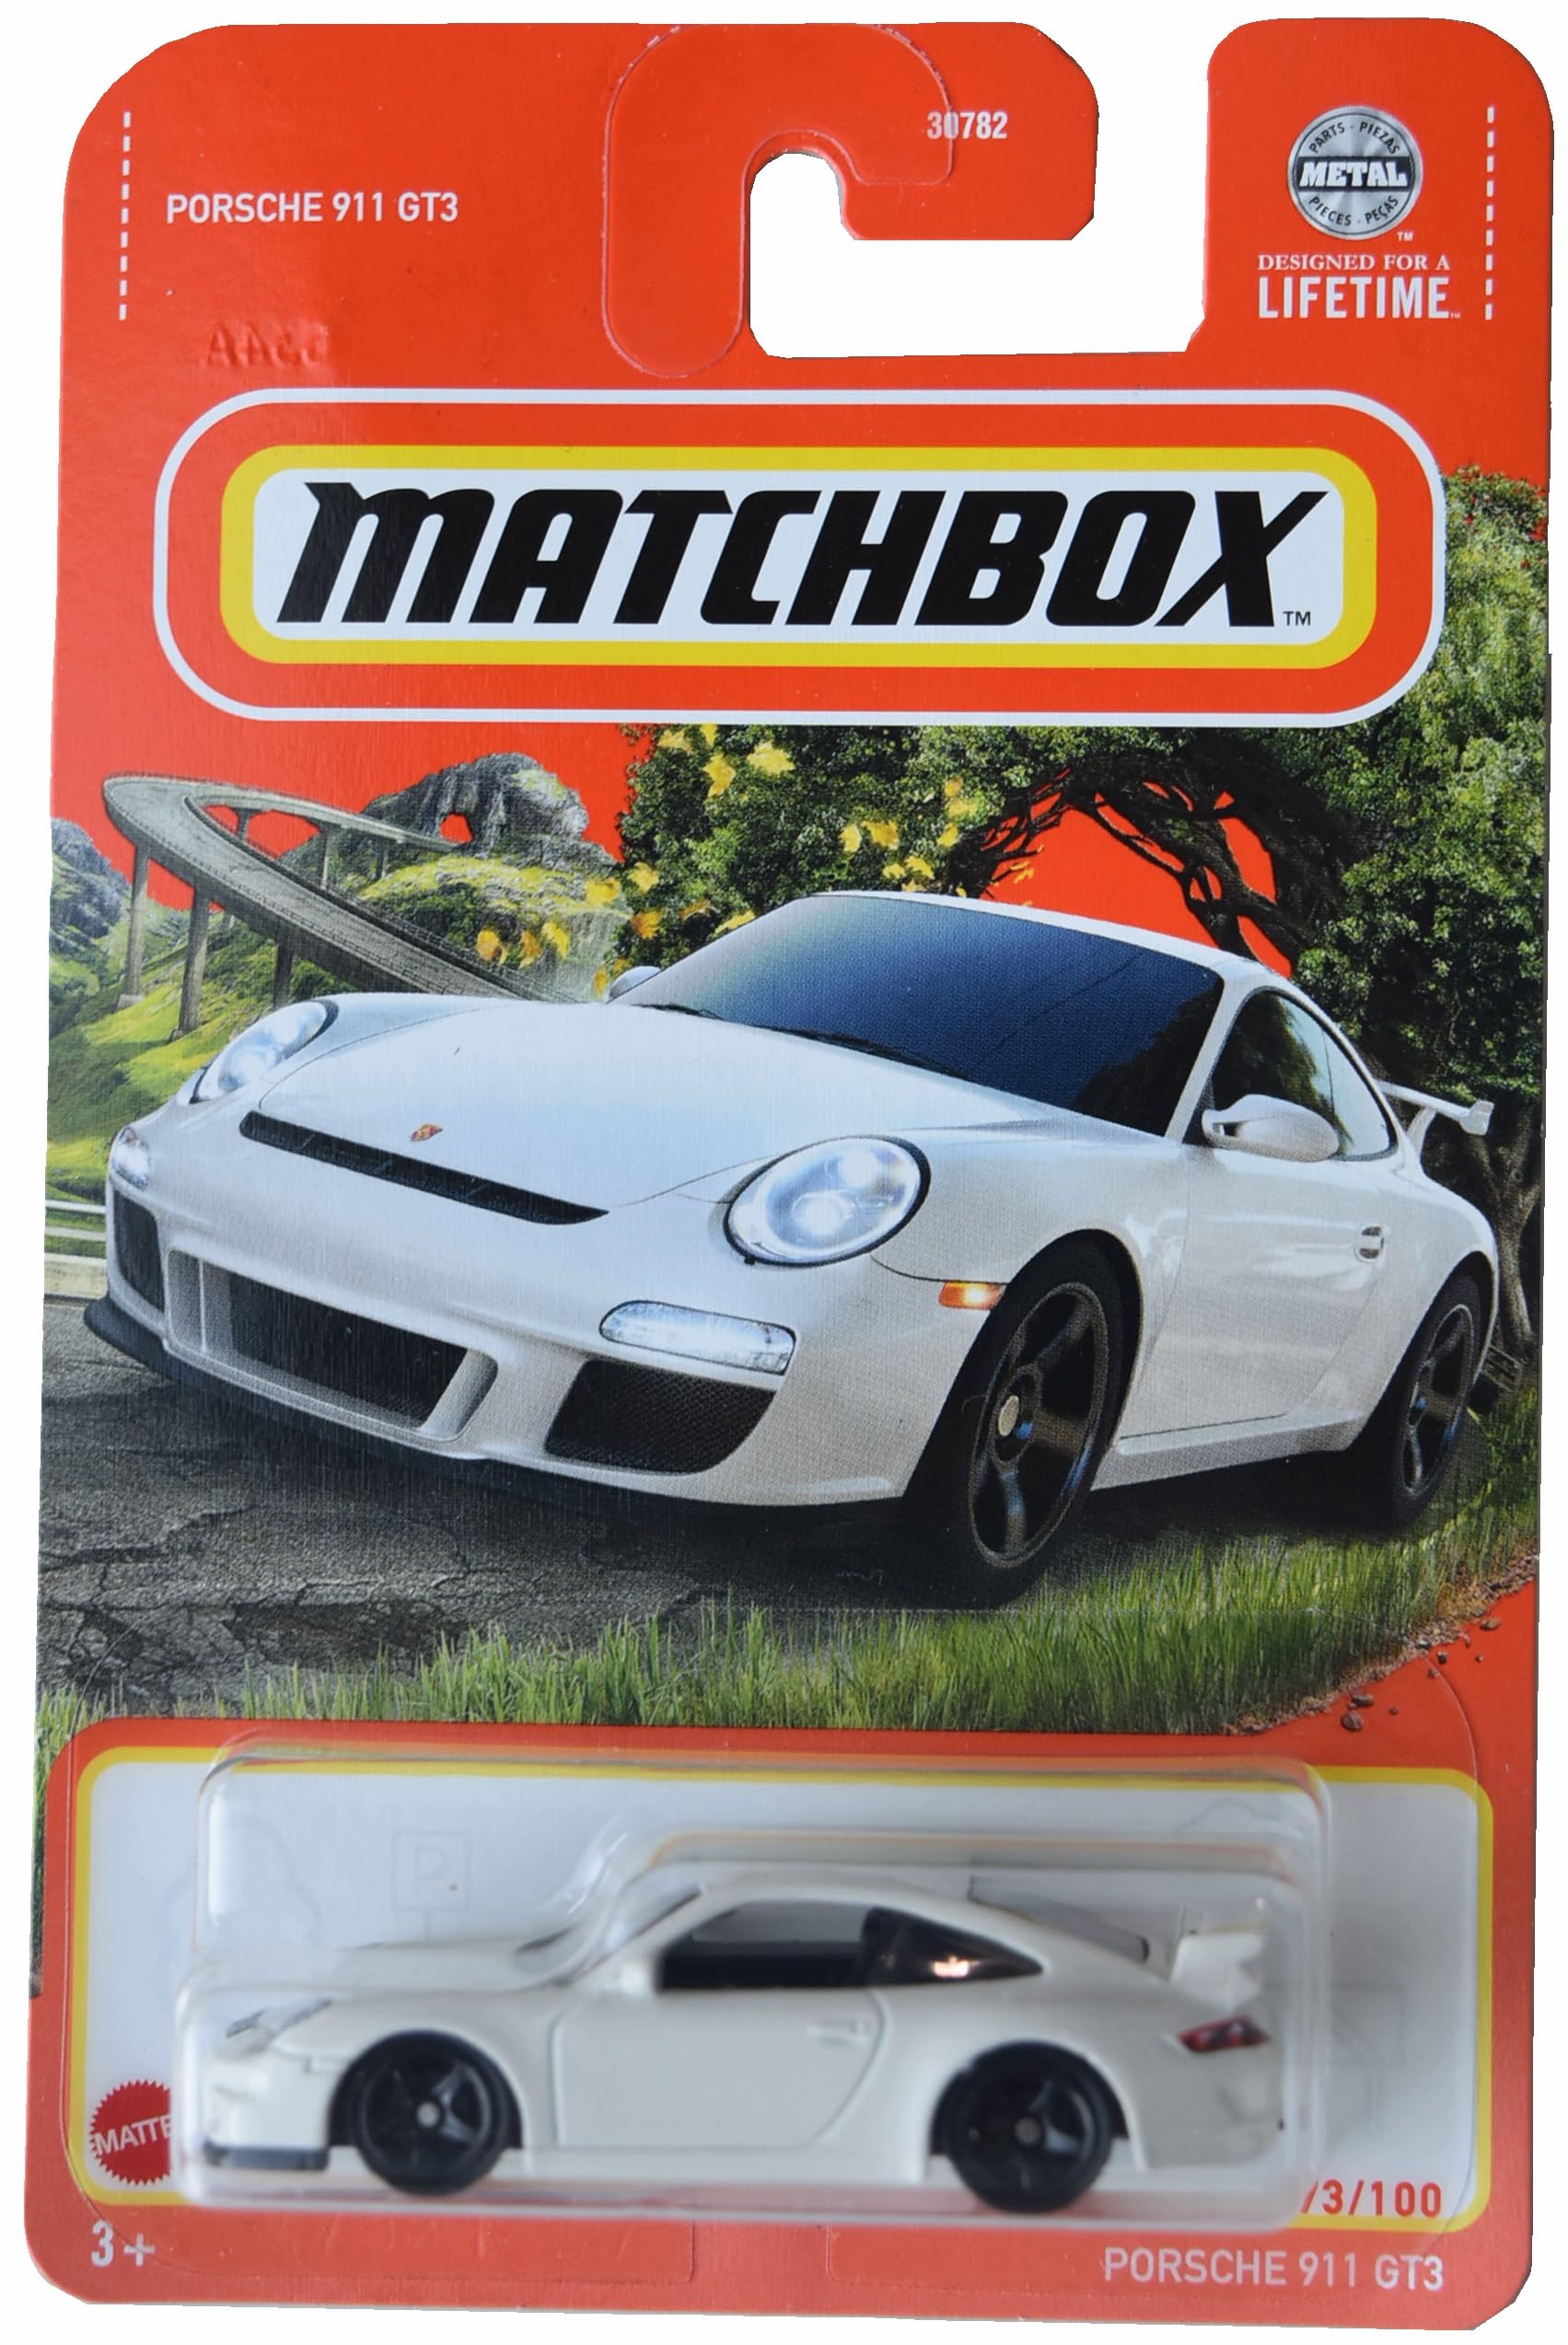 Matchbox Porsche 911 GT3, White 73/100